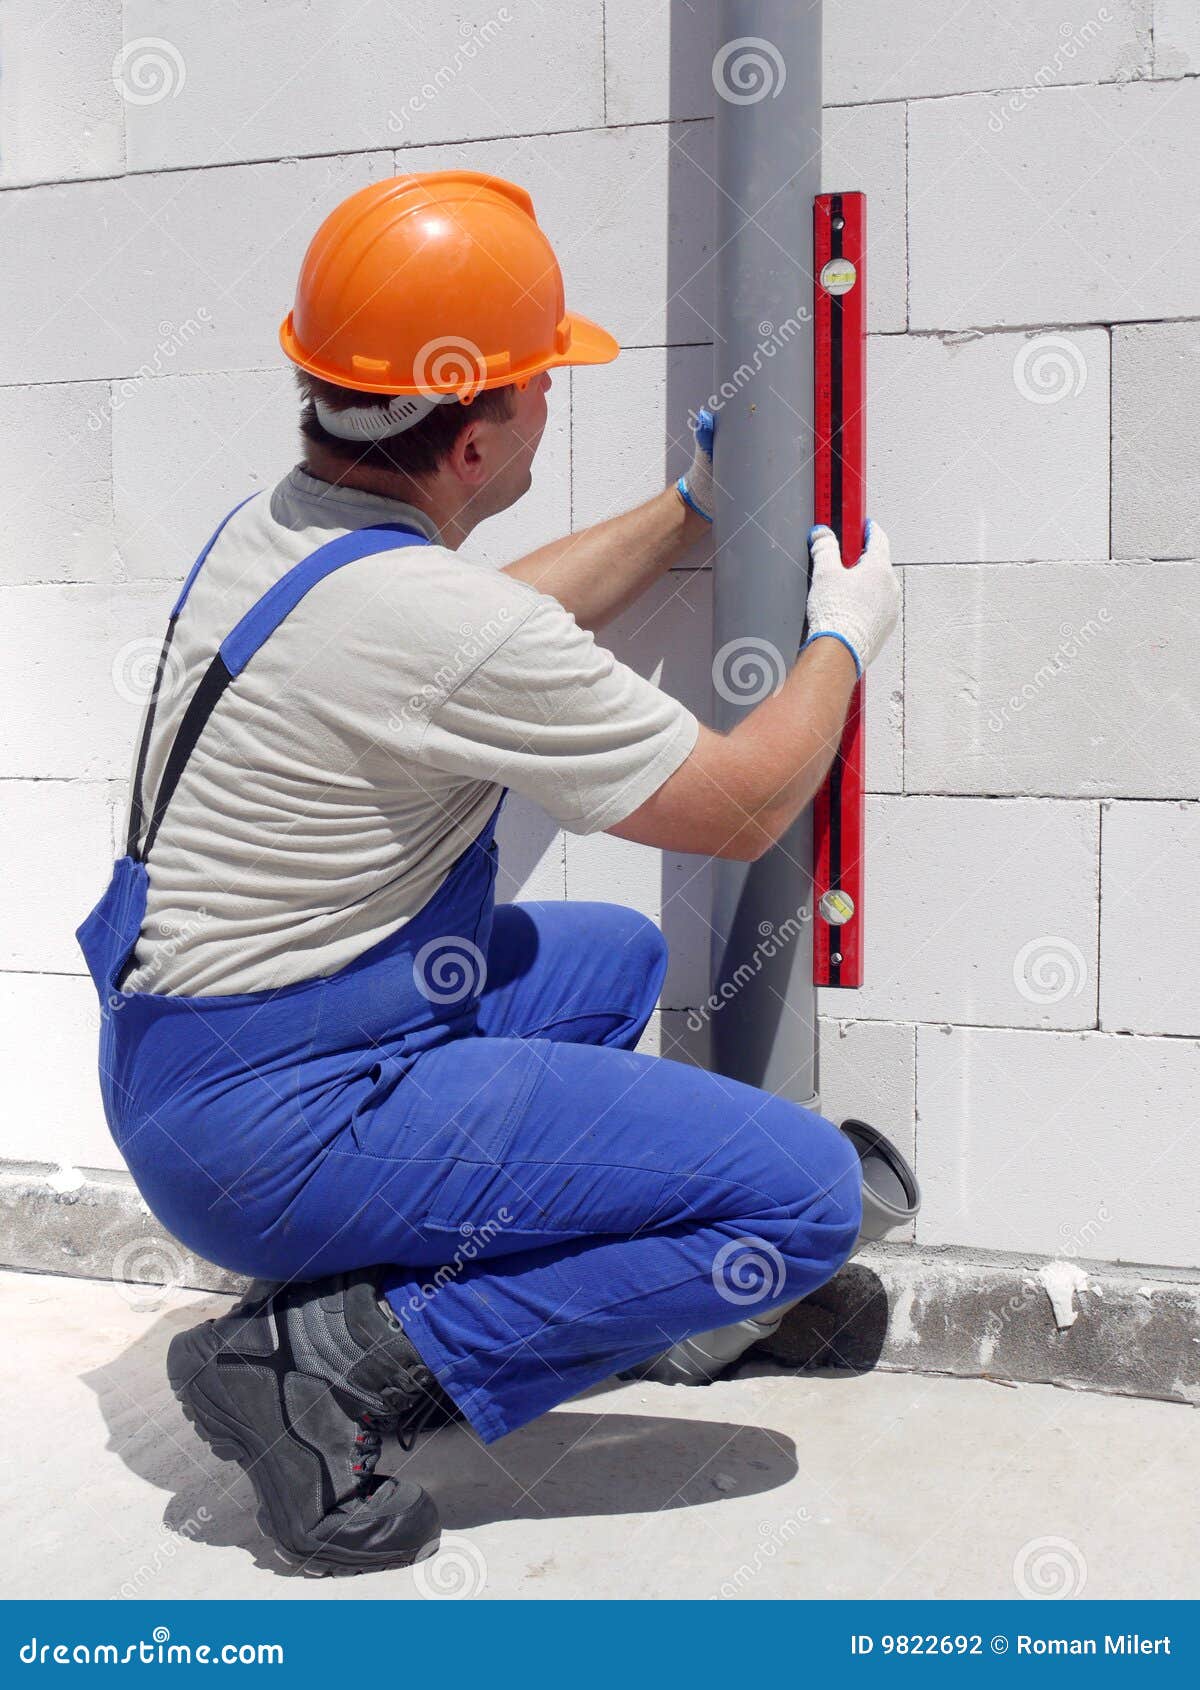 Plumber At Work Stock Photogra pic